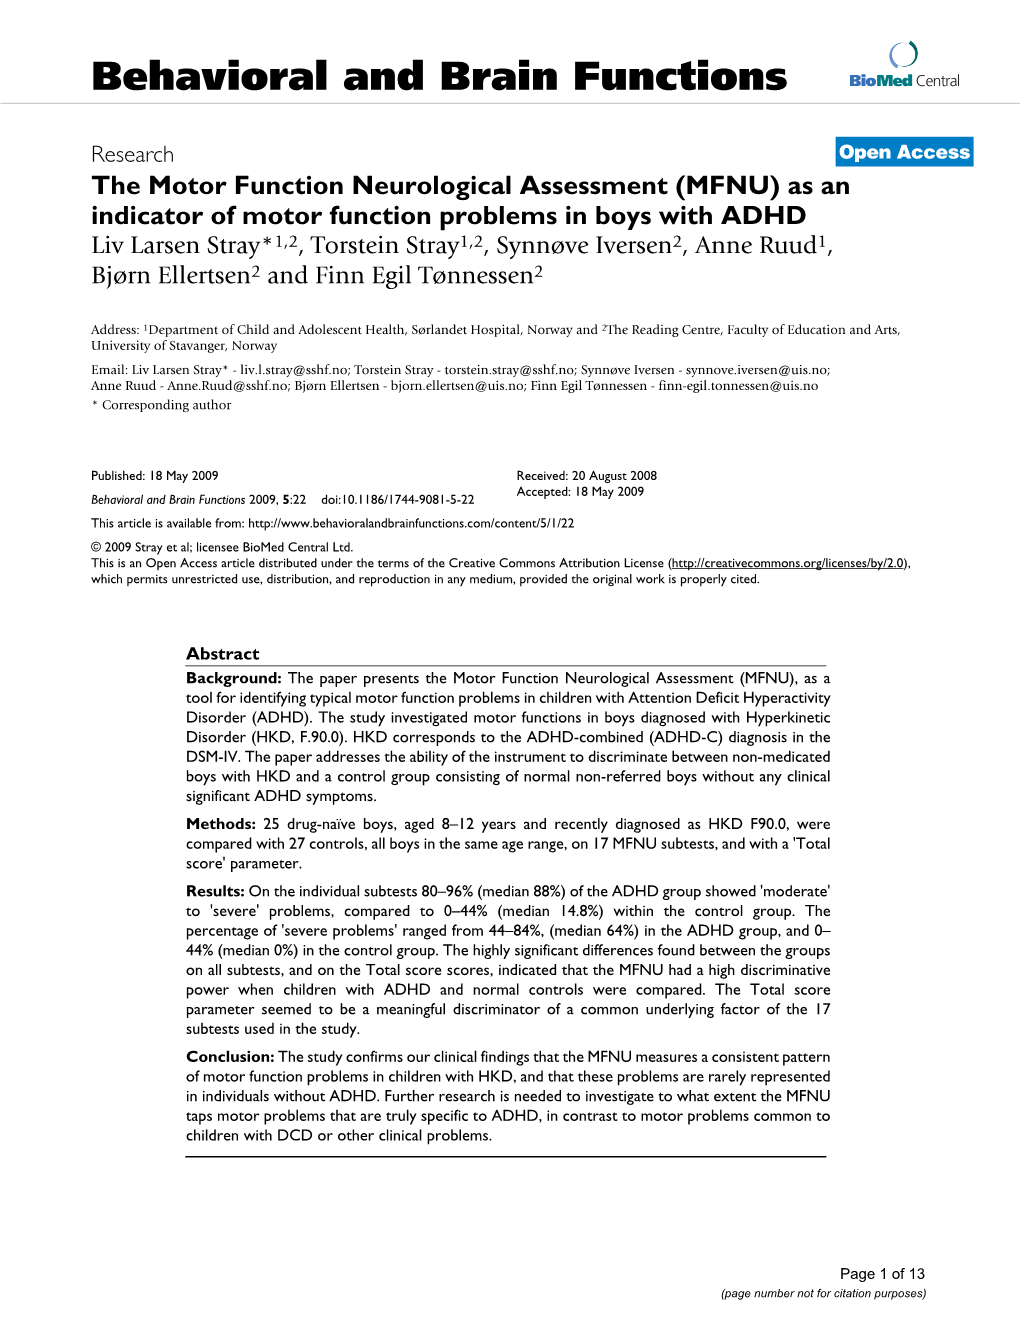 The Motor Function Neurological Assessment (MFNU) As an Indicator